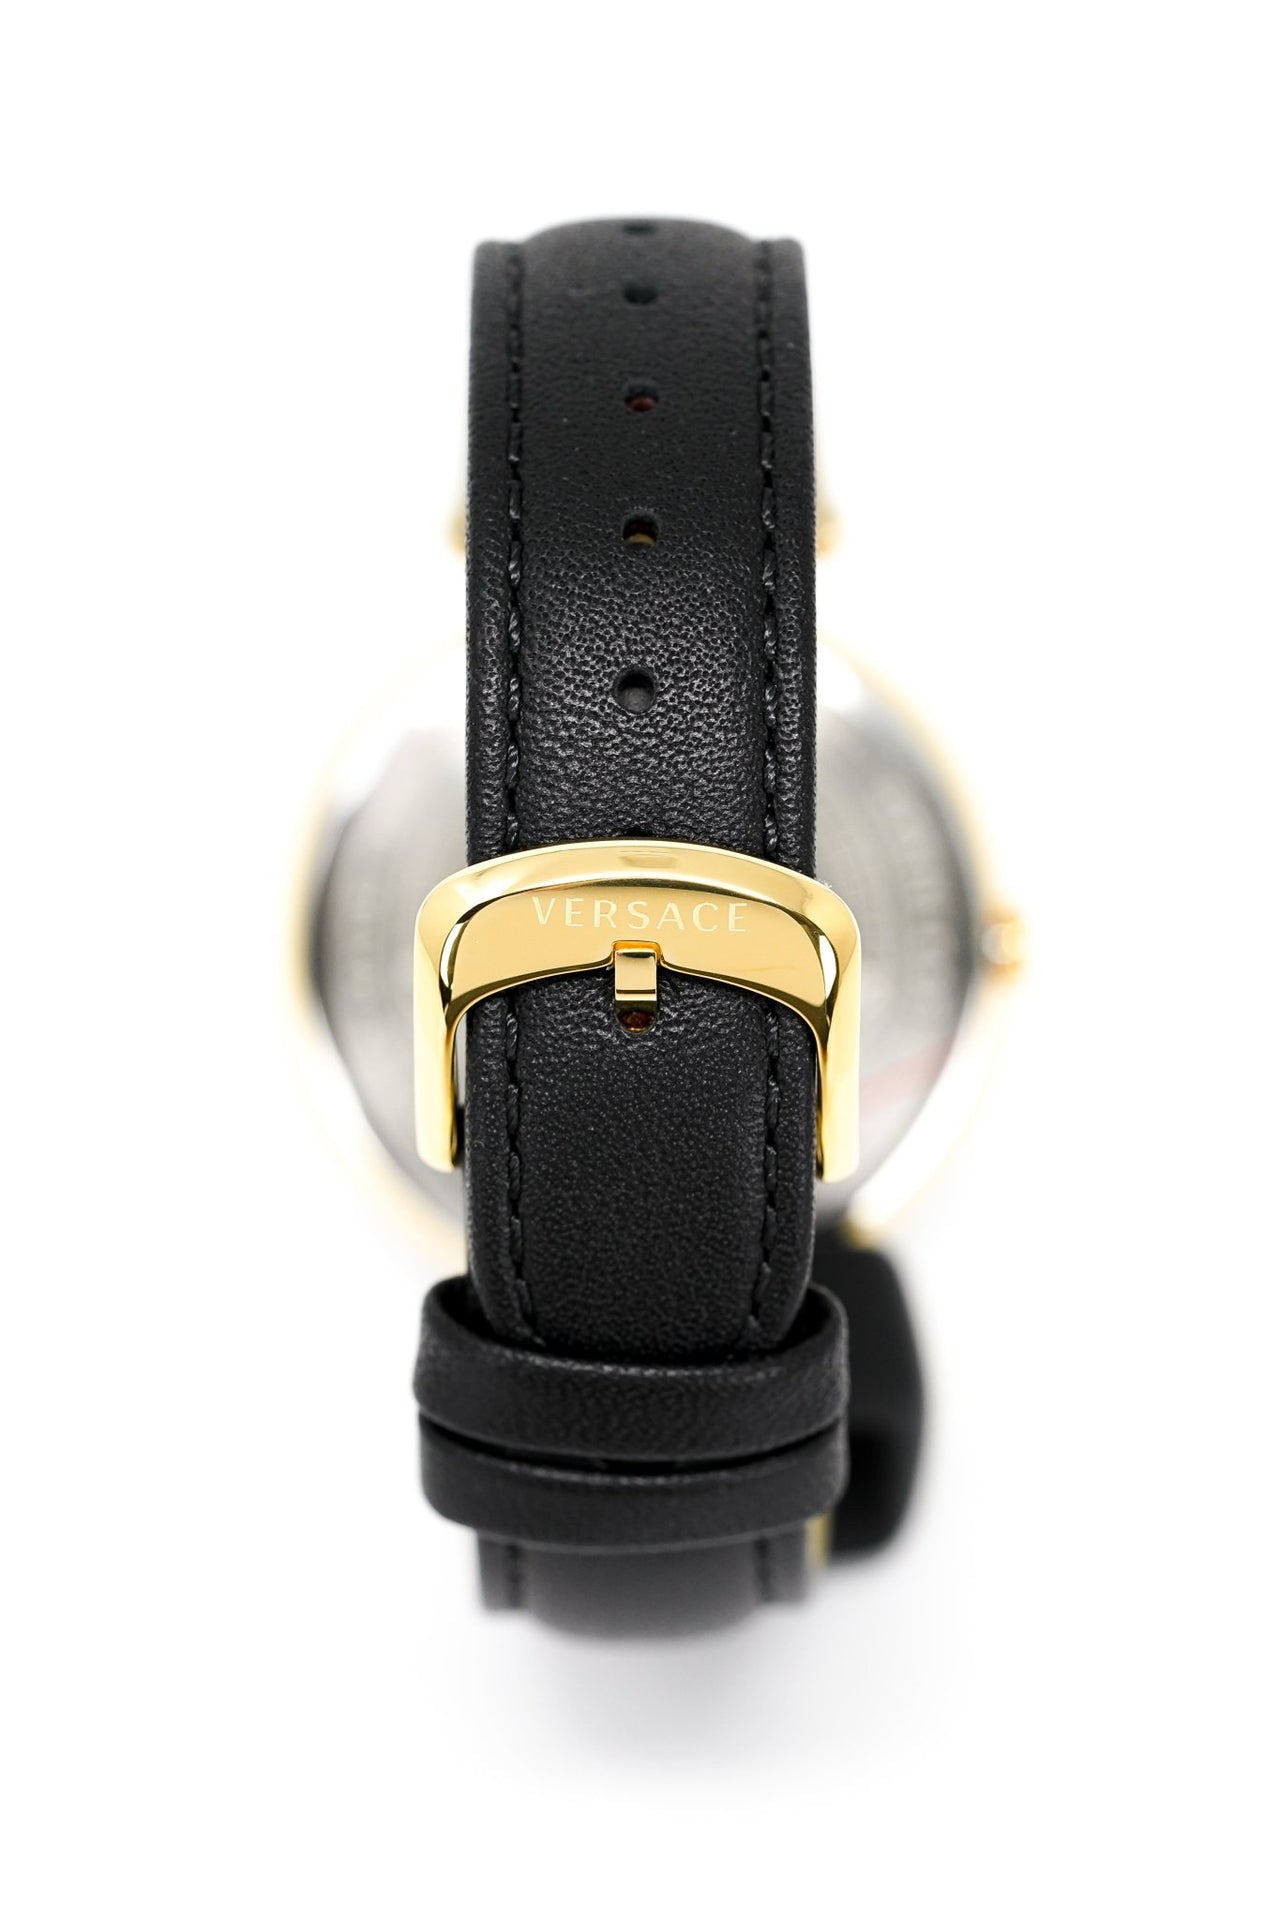 Versace Ladies Watch Palazzo Empire Black Gold VECO01922 - Watches & Crystals